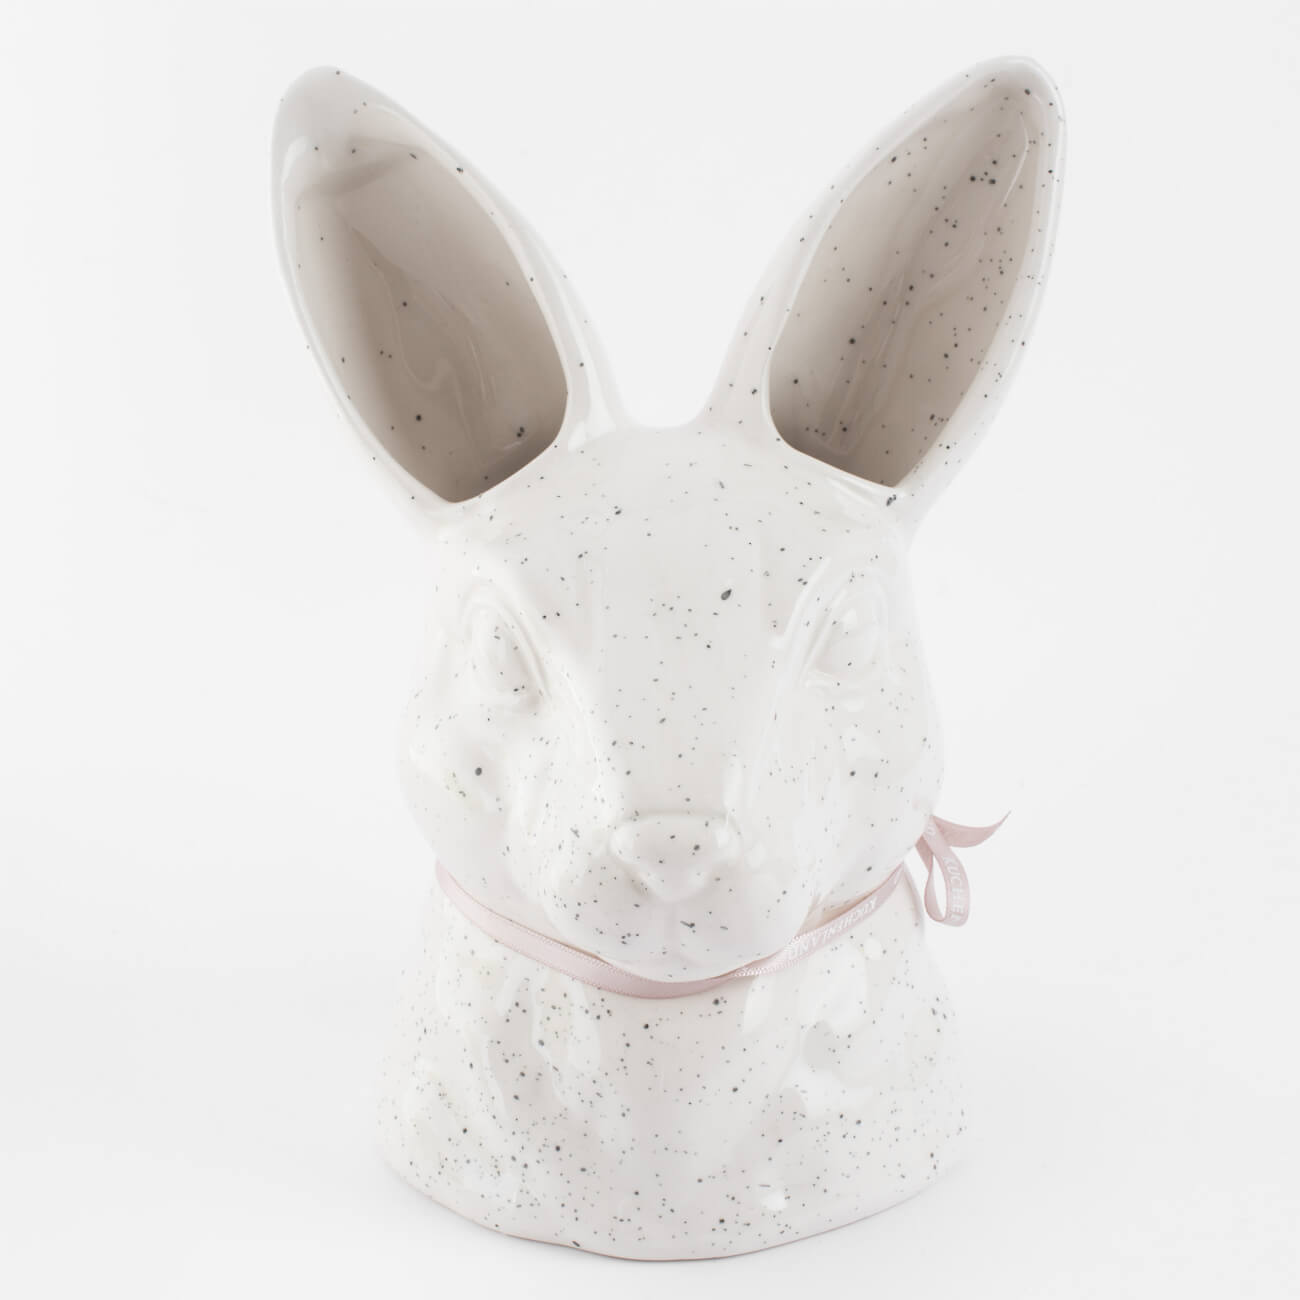 Ваза для цветов, 20 см, декоративная, керамика, молочная, в крапинку, Кролик, Natural Easter конфетница 15х14 см фарфор p молочная в крапинку кролик с яйцом natural easter